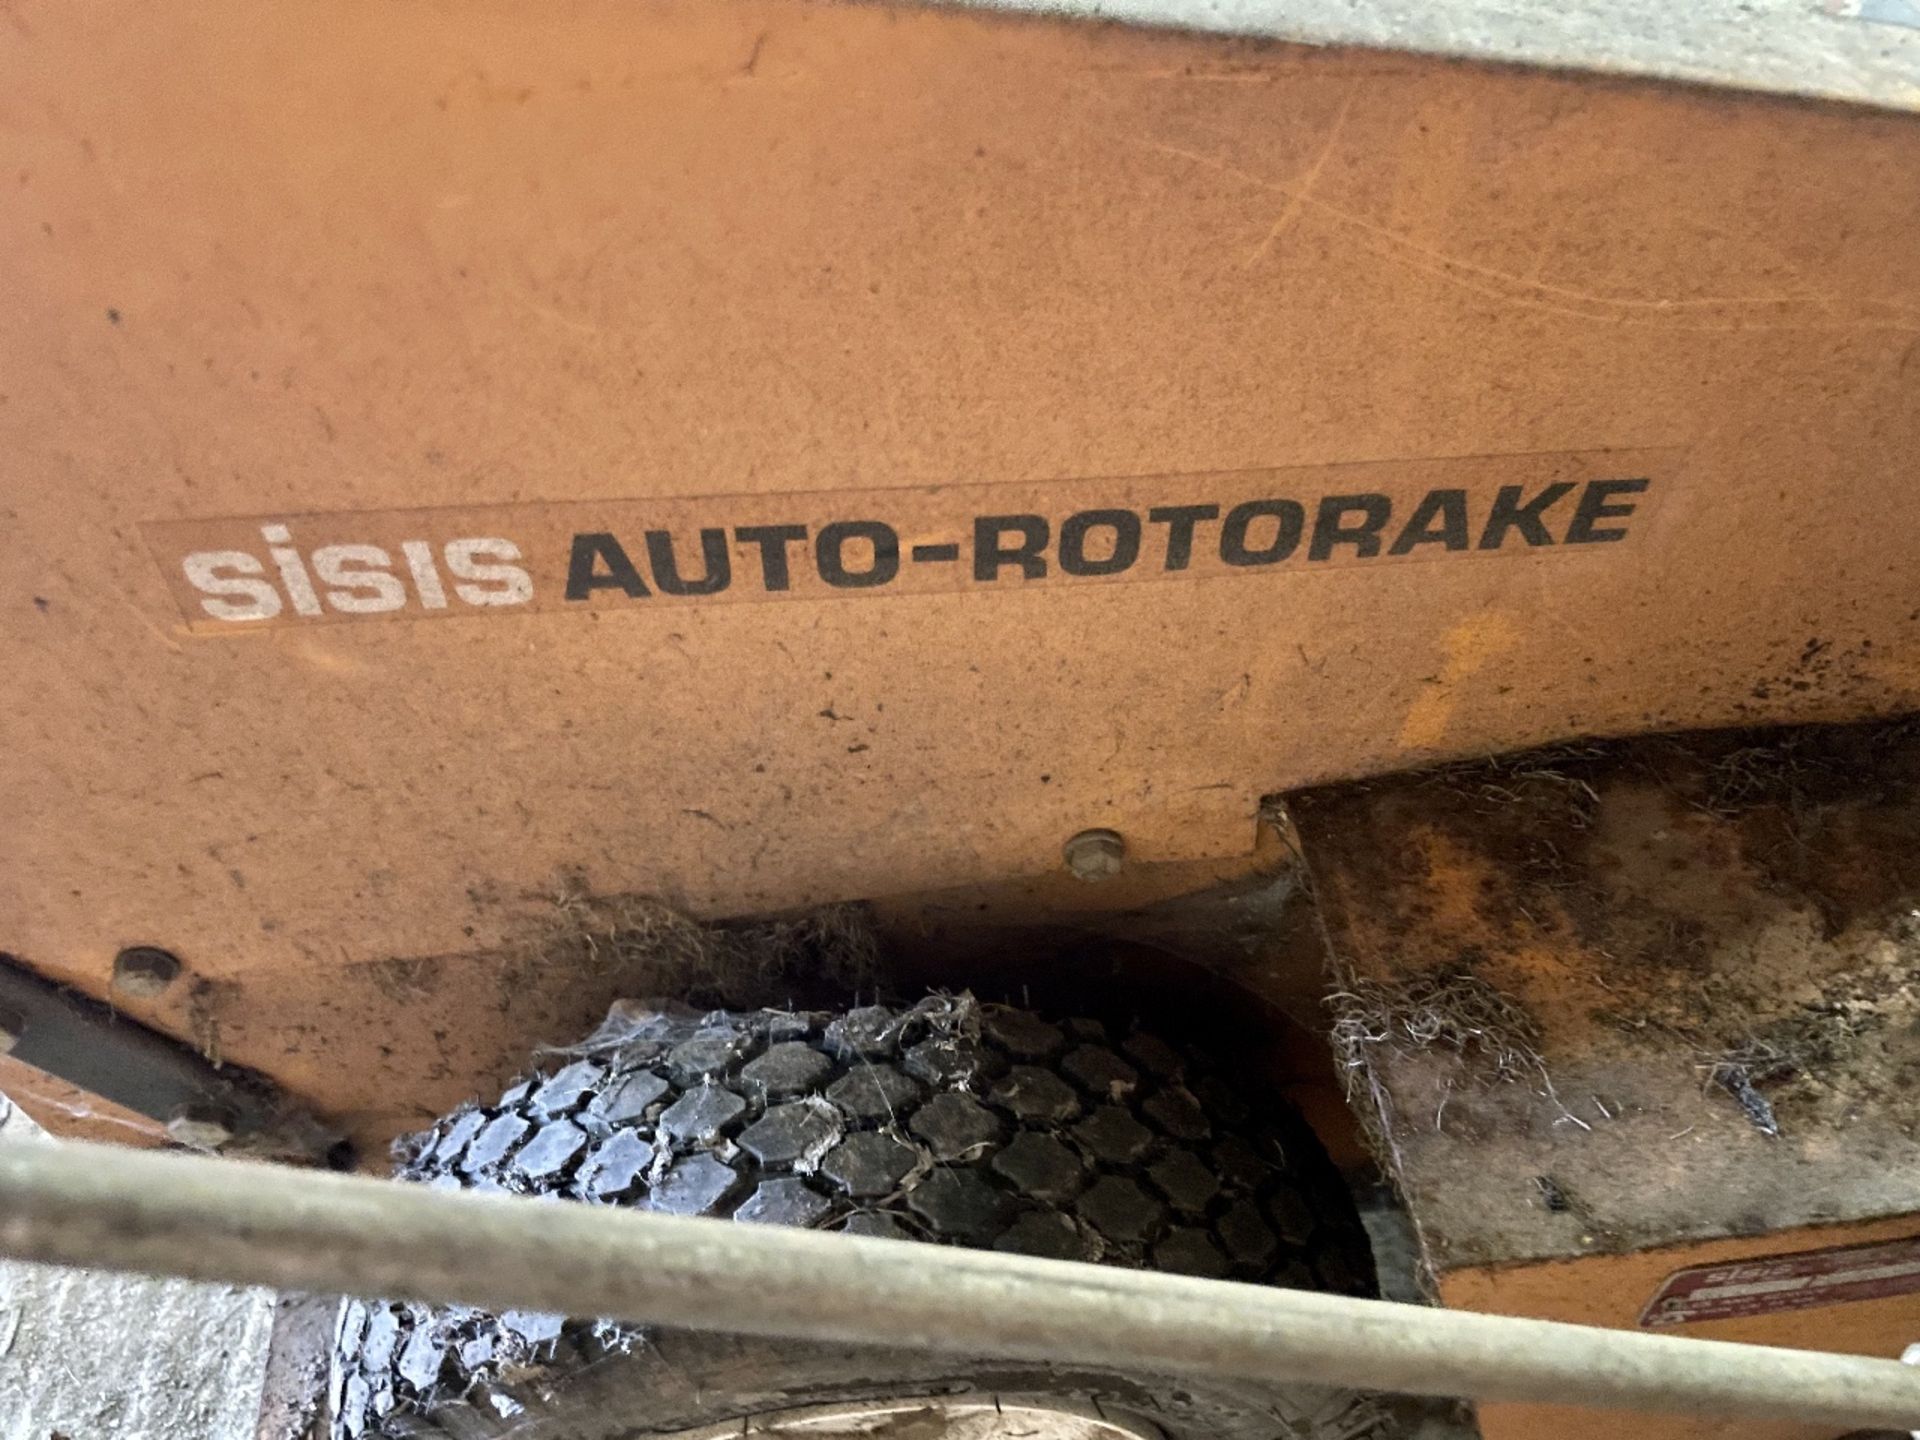 Sisis Auto Roto Rake - Image 2 of 4